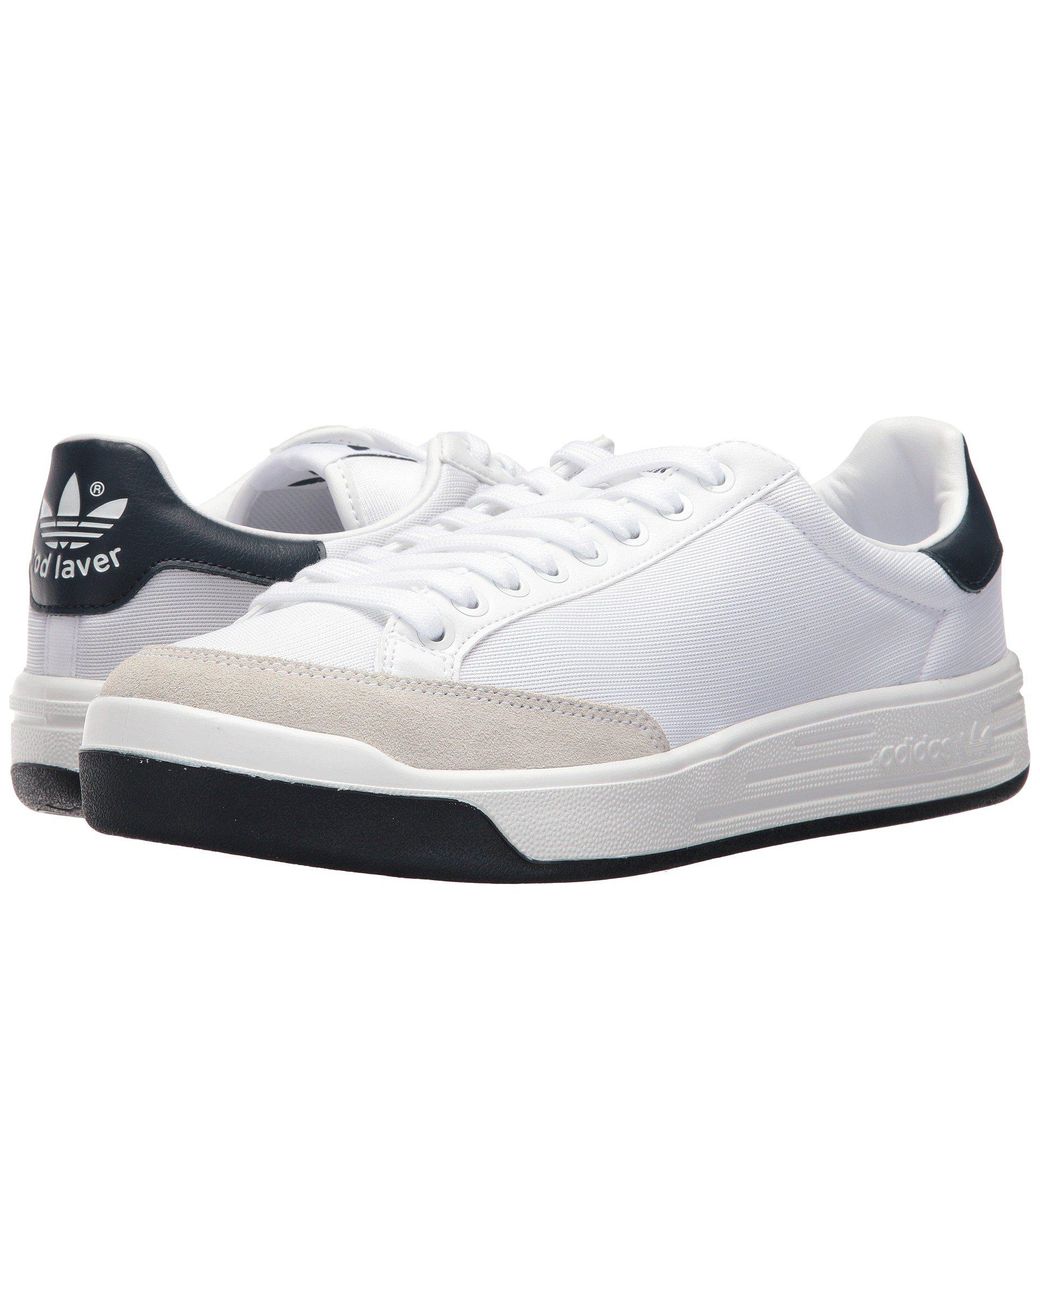 Stige Pirat Tochi træ adidas Originals Rod Laver Super (footwear White/footwear White/collegiate  Navy) Men's Tennis Shoes for Men | Lyst